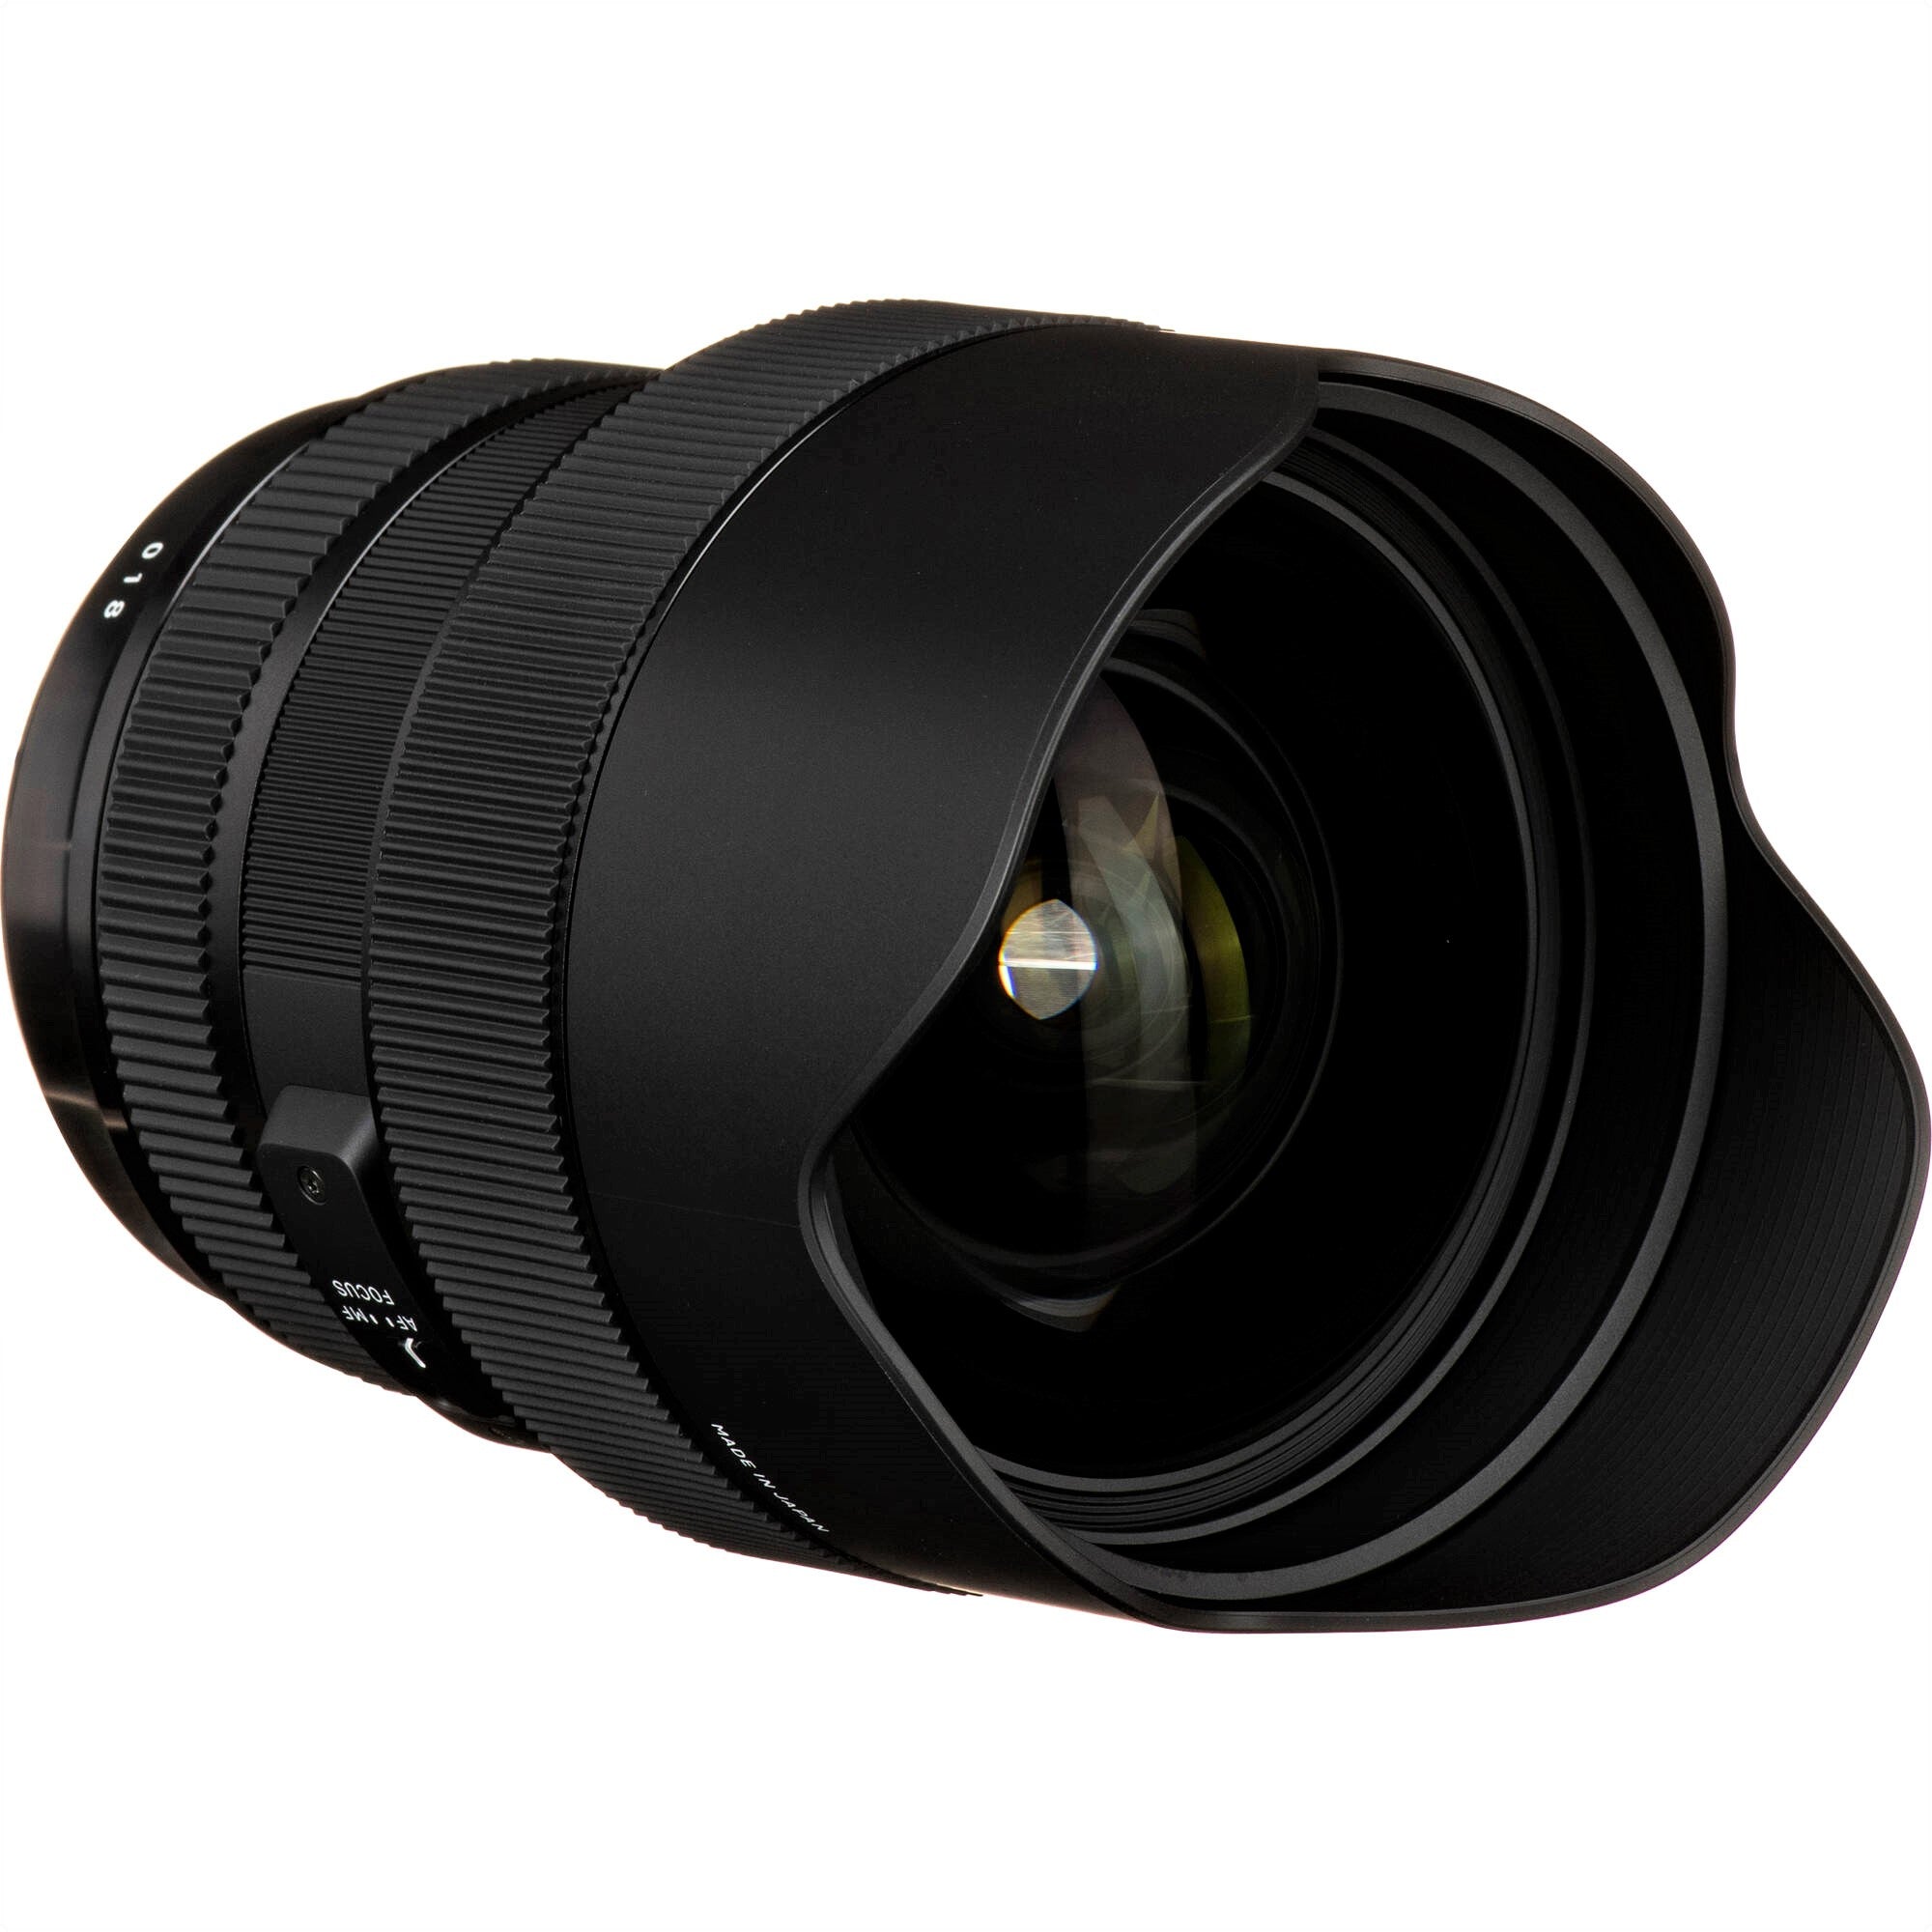 Sigma 14-24mm F2.8 DG HSM Art Lens for Canon EF